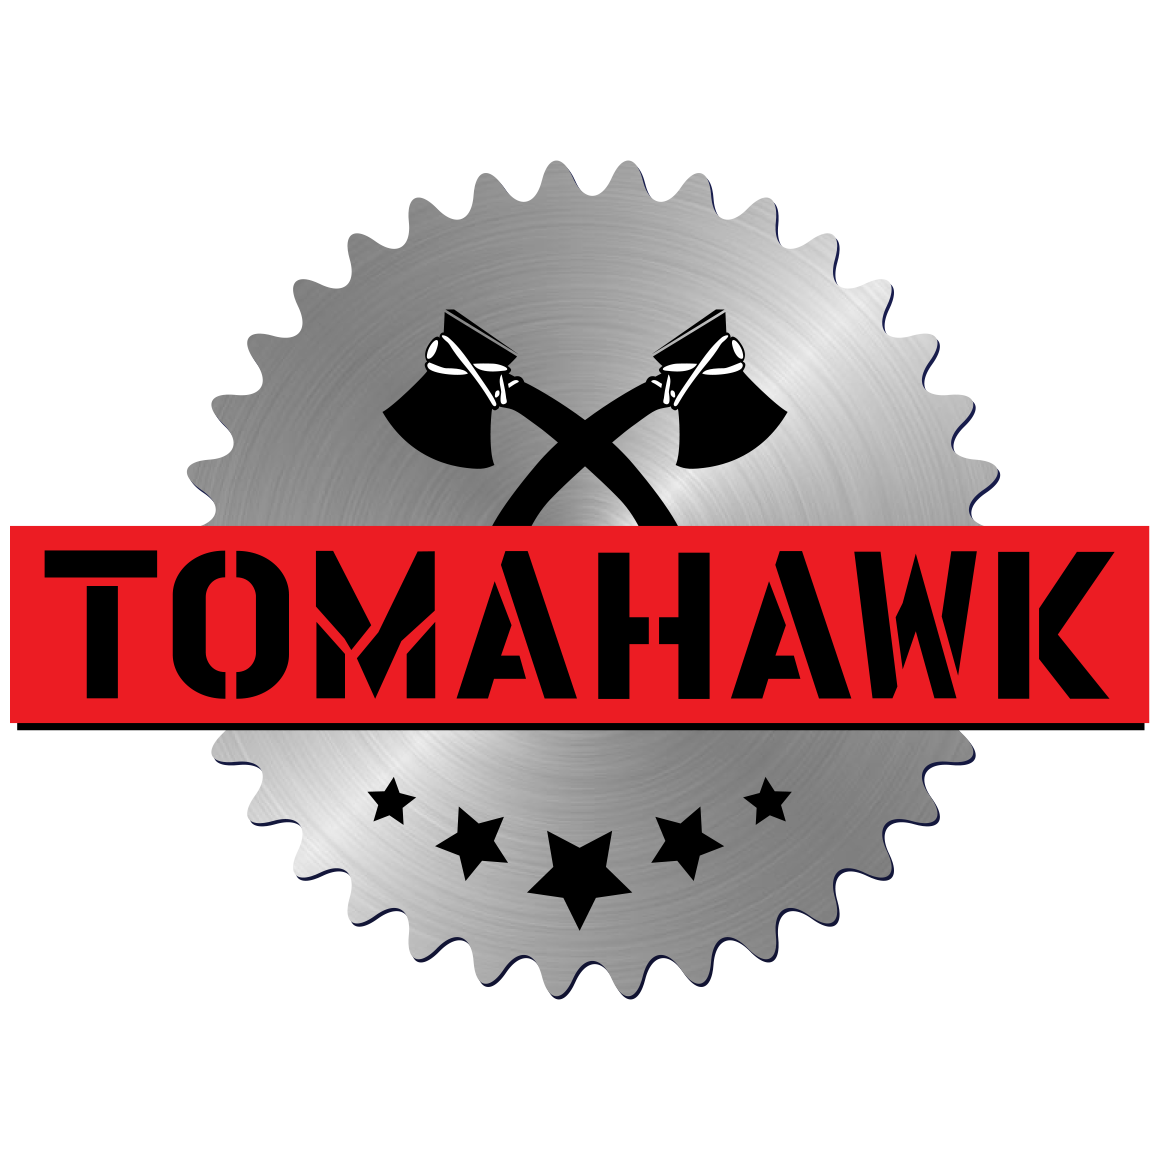 JMI Supply Offers Tomahawk Brand Municipal and Construction Supplies